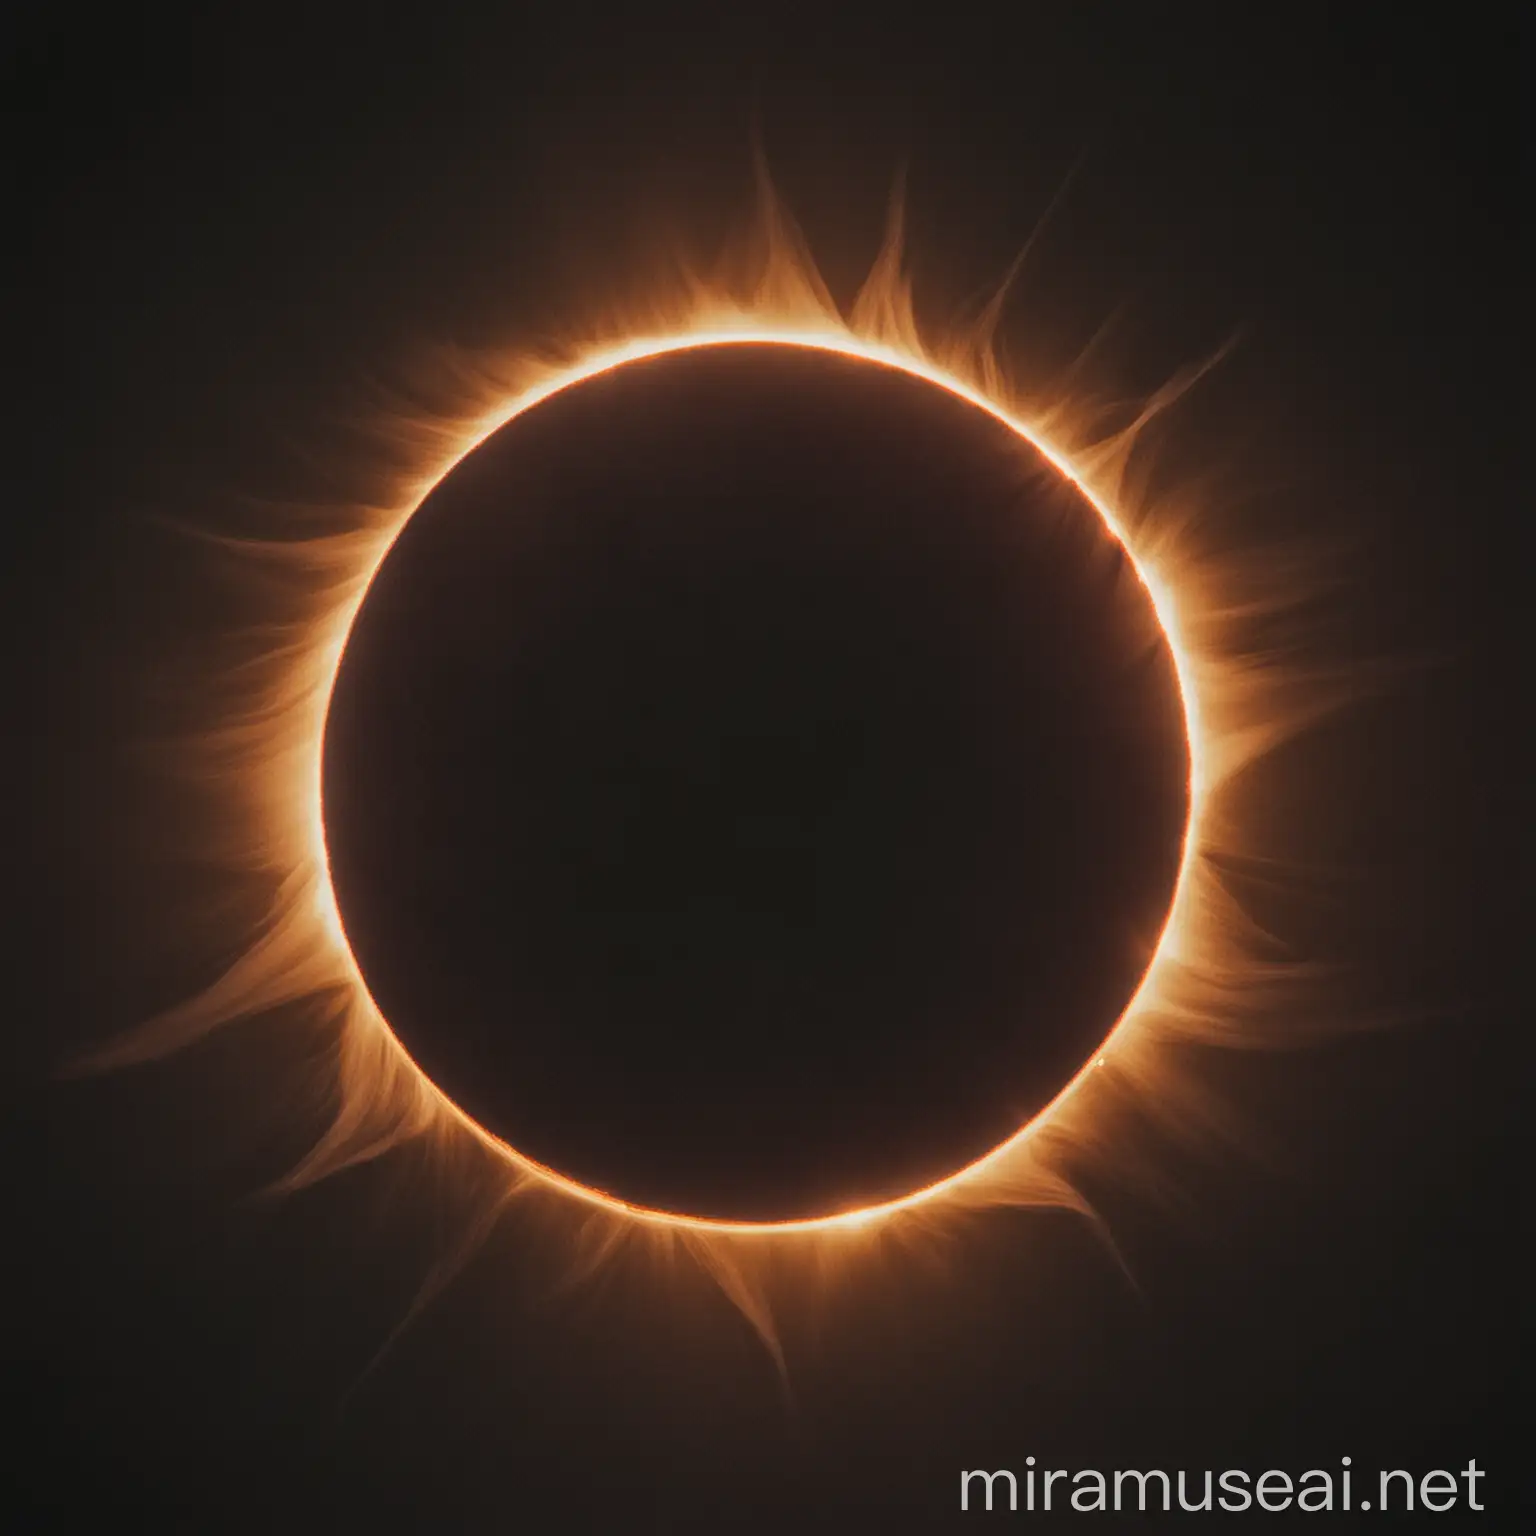 Breathtaking Solar Eclipse Celestial Phenomenon Captured in Radiant Glory